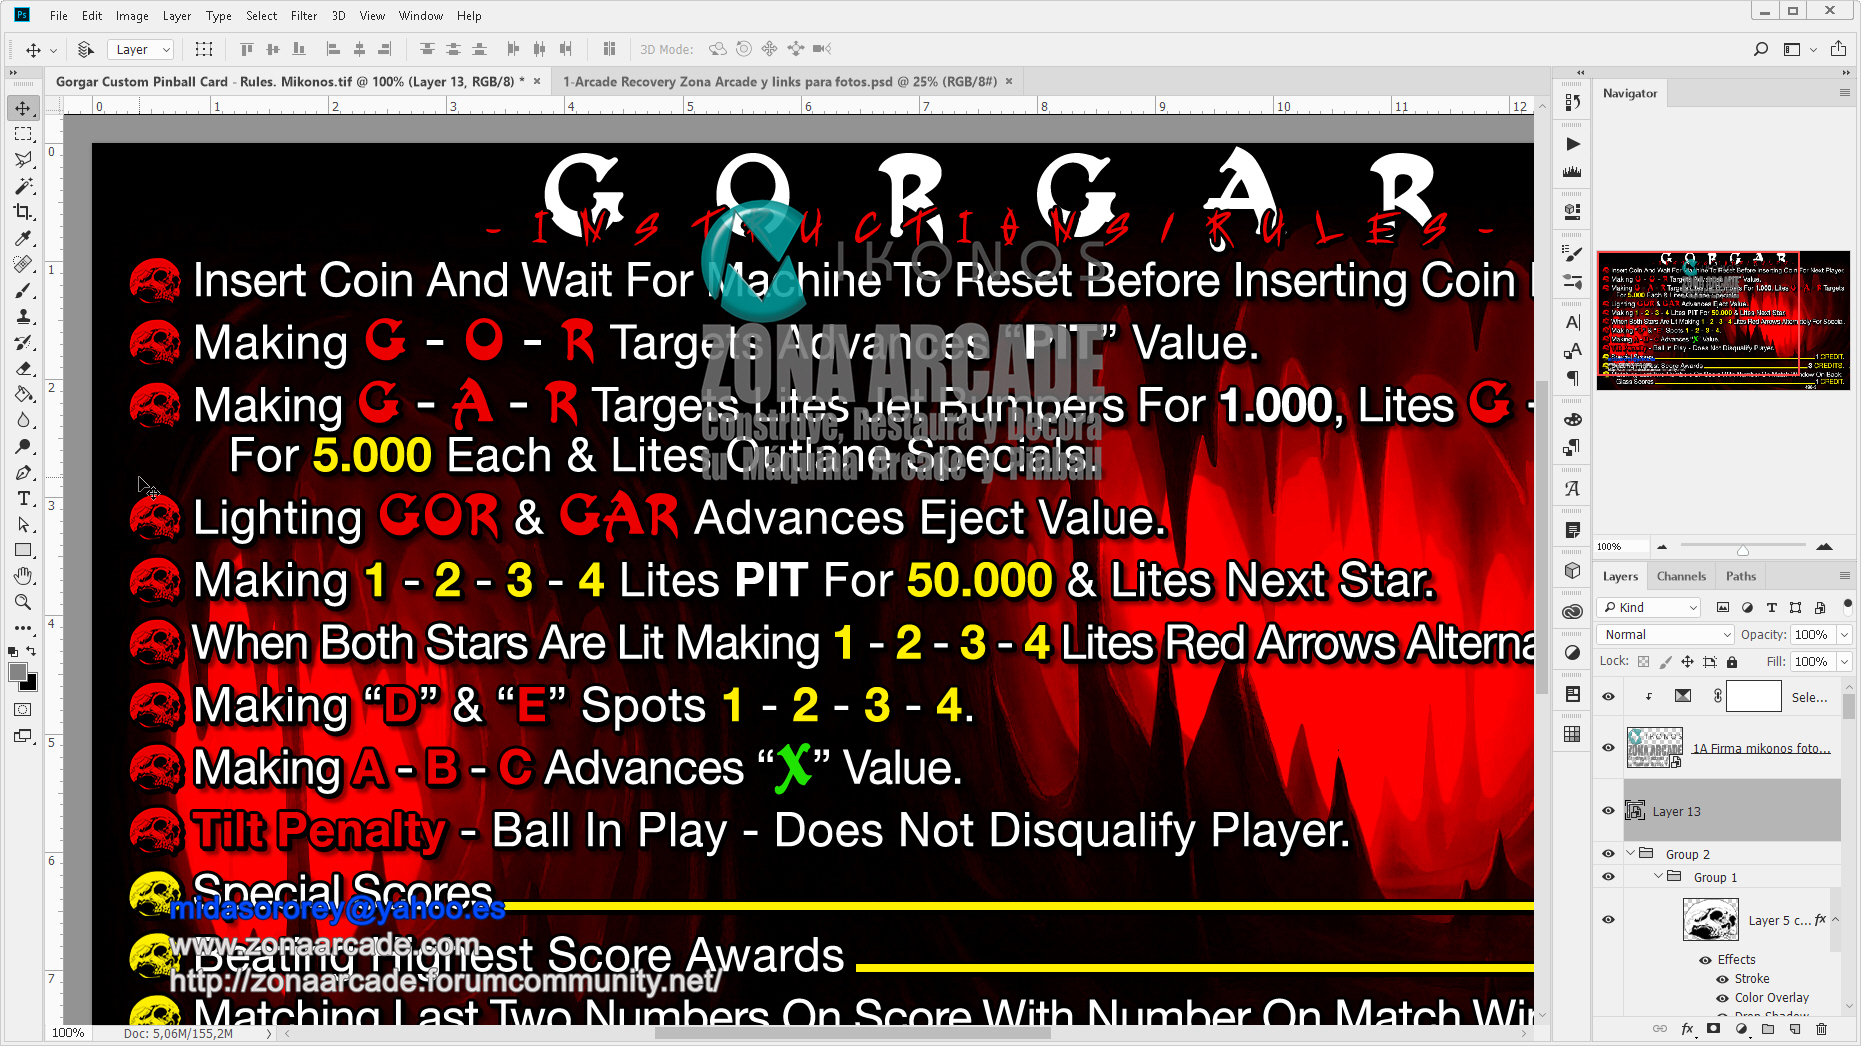 Gorgar-Custom-Pinball-Card-Rules-Mikonos2